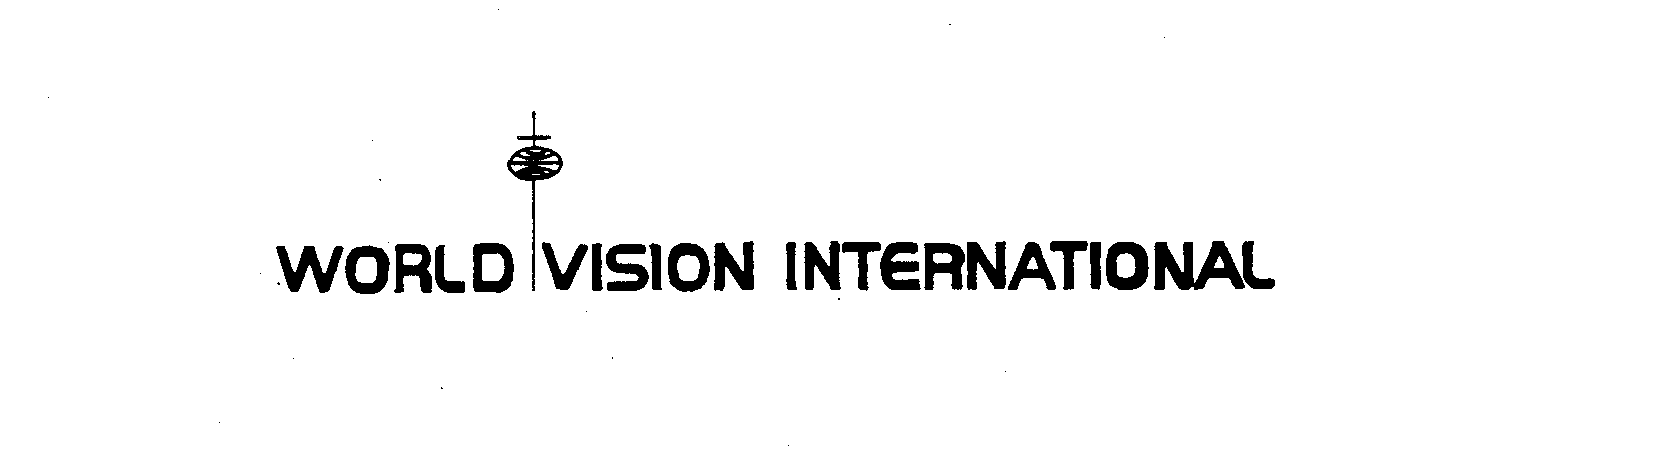  WORLD VISION INTERNATIONAL